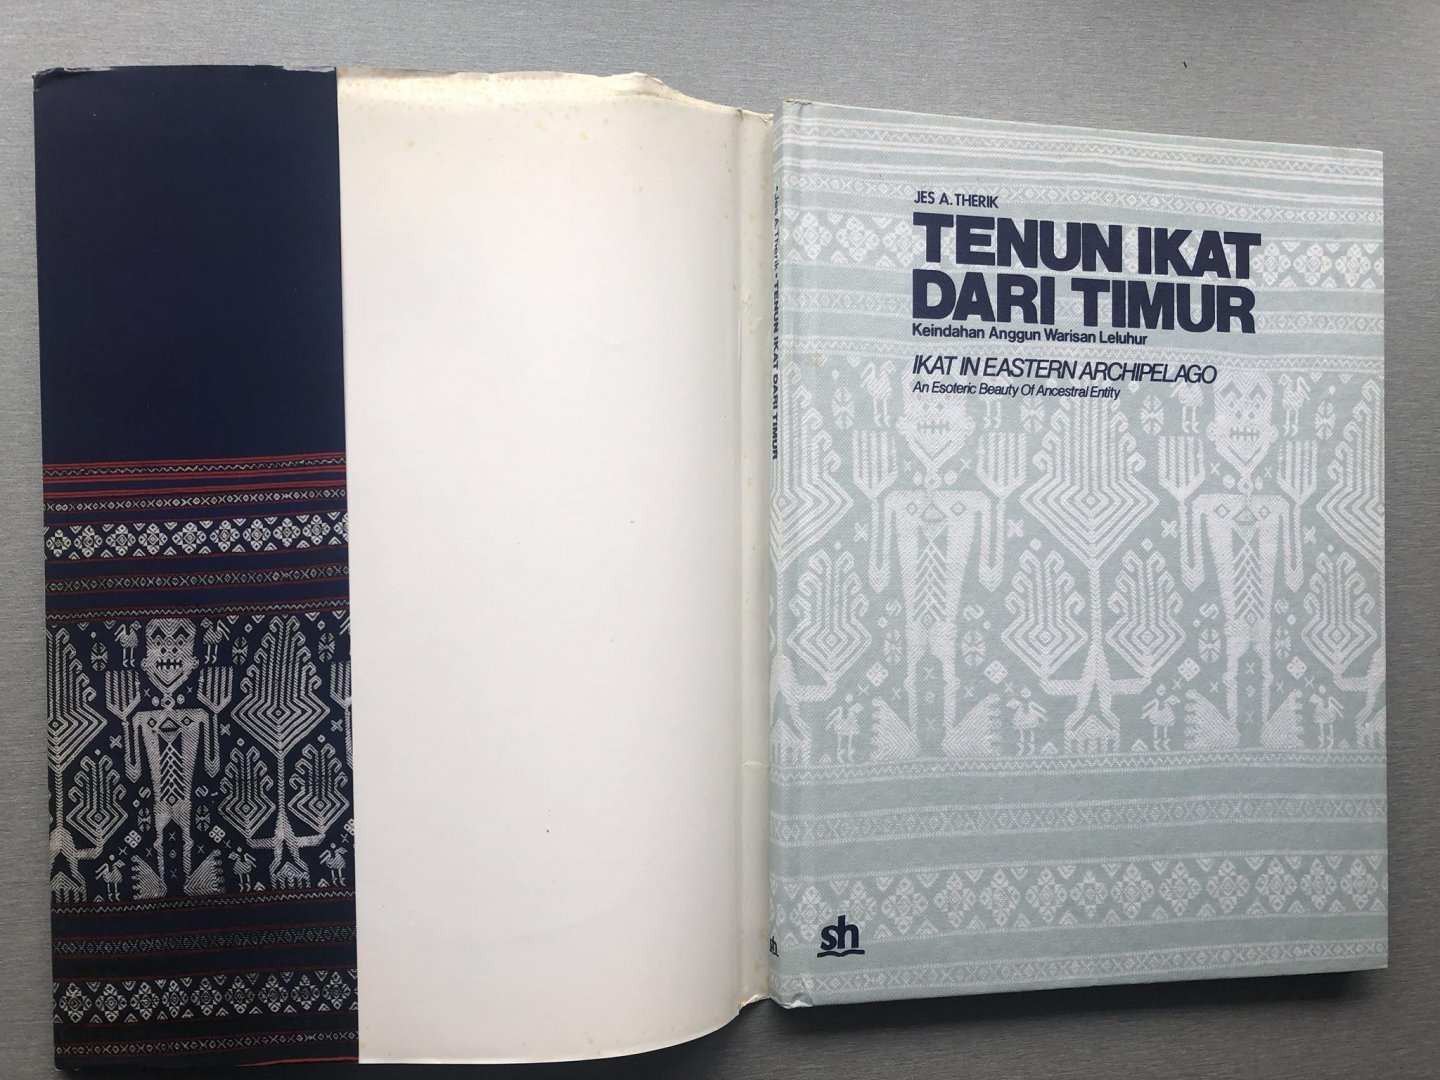 Jes A. Therik - Tenun ikat dari Timur / Ikat in Eastern Archipelago (an esoteric beauty of ancestral entity)